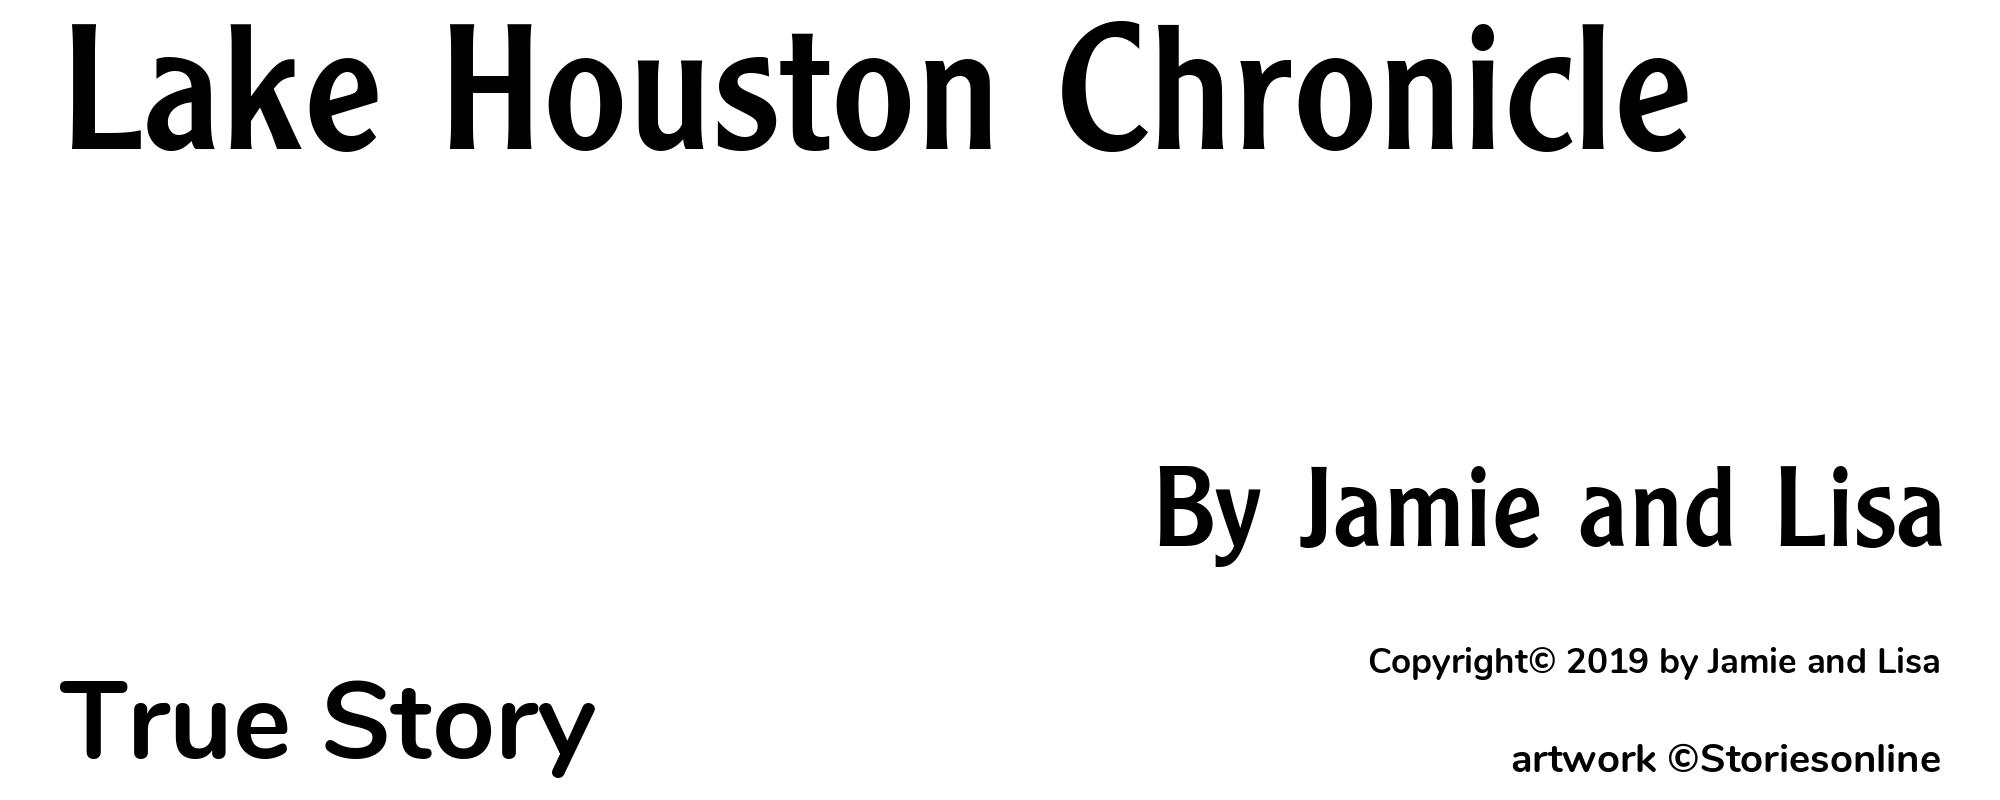 Lake Houston Chronicle - Cover